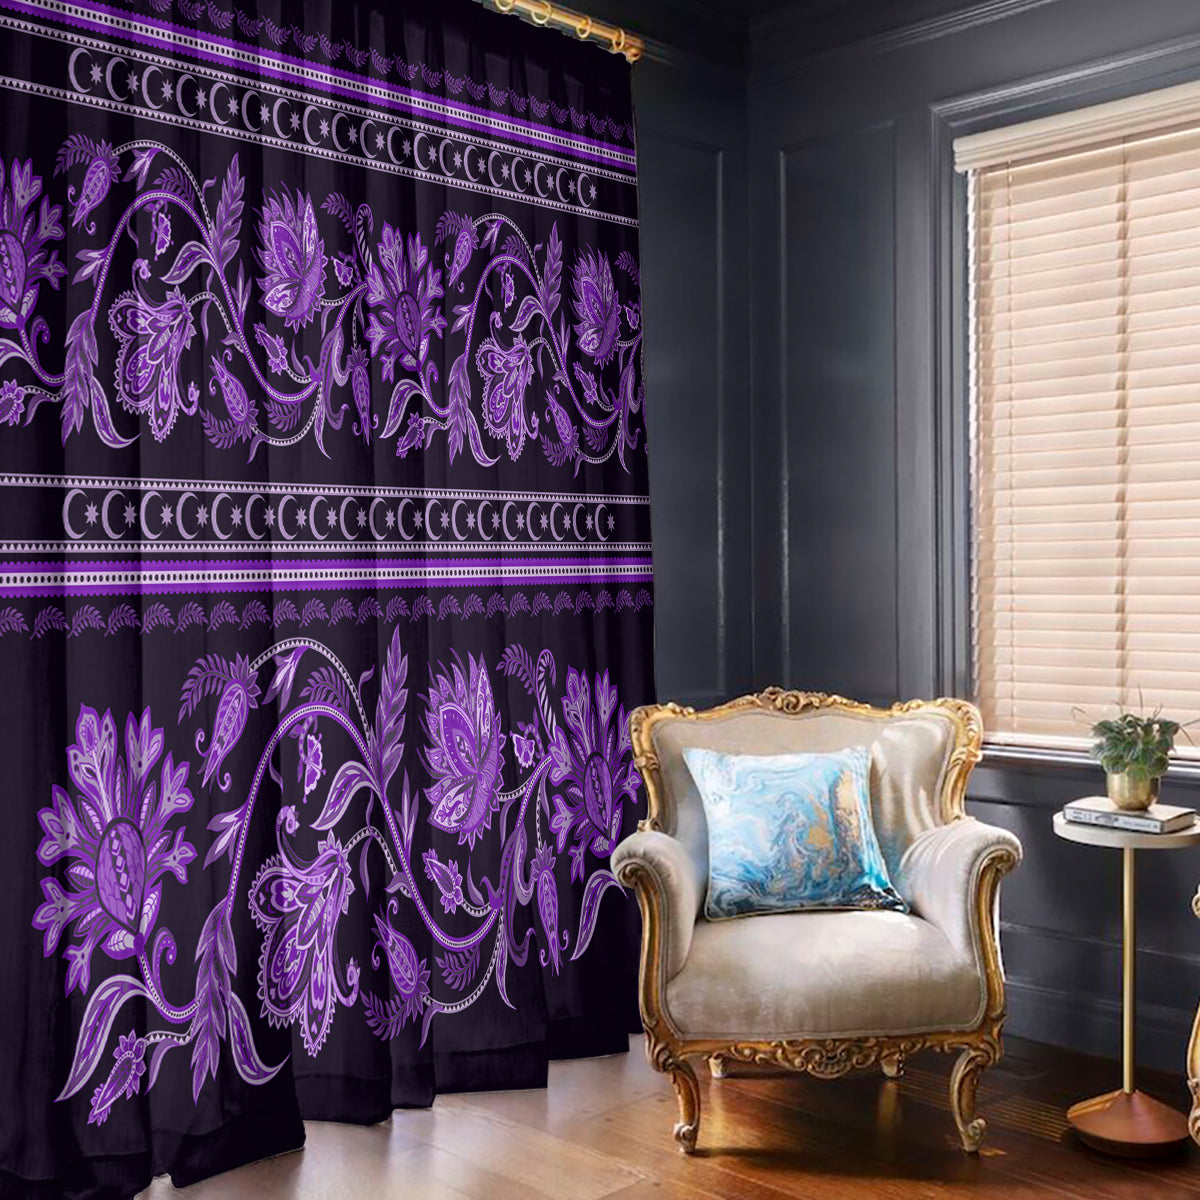 azerbaijan-window-curtain-traditional-pattern-ornament-with-flowers-buta-violet